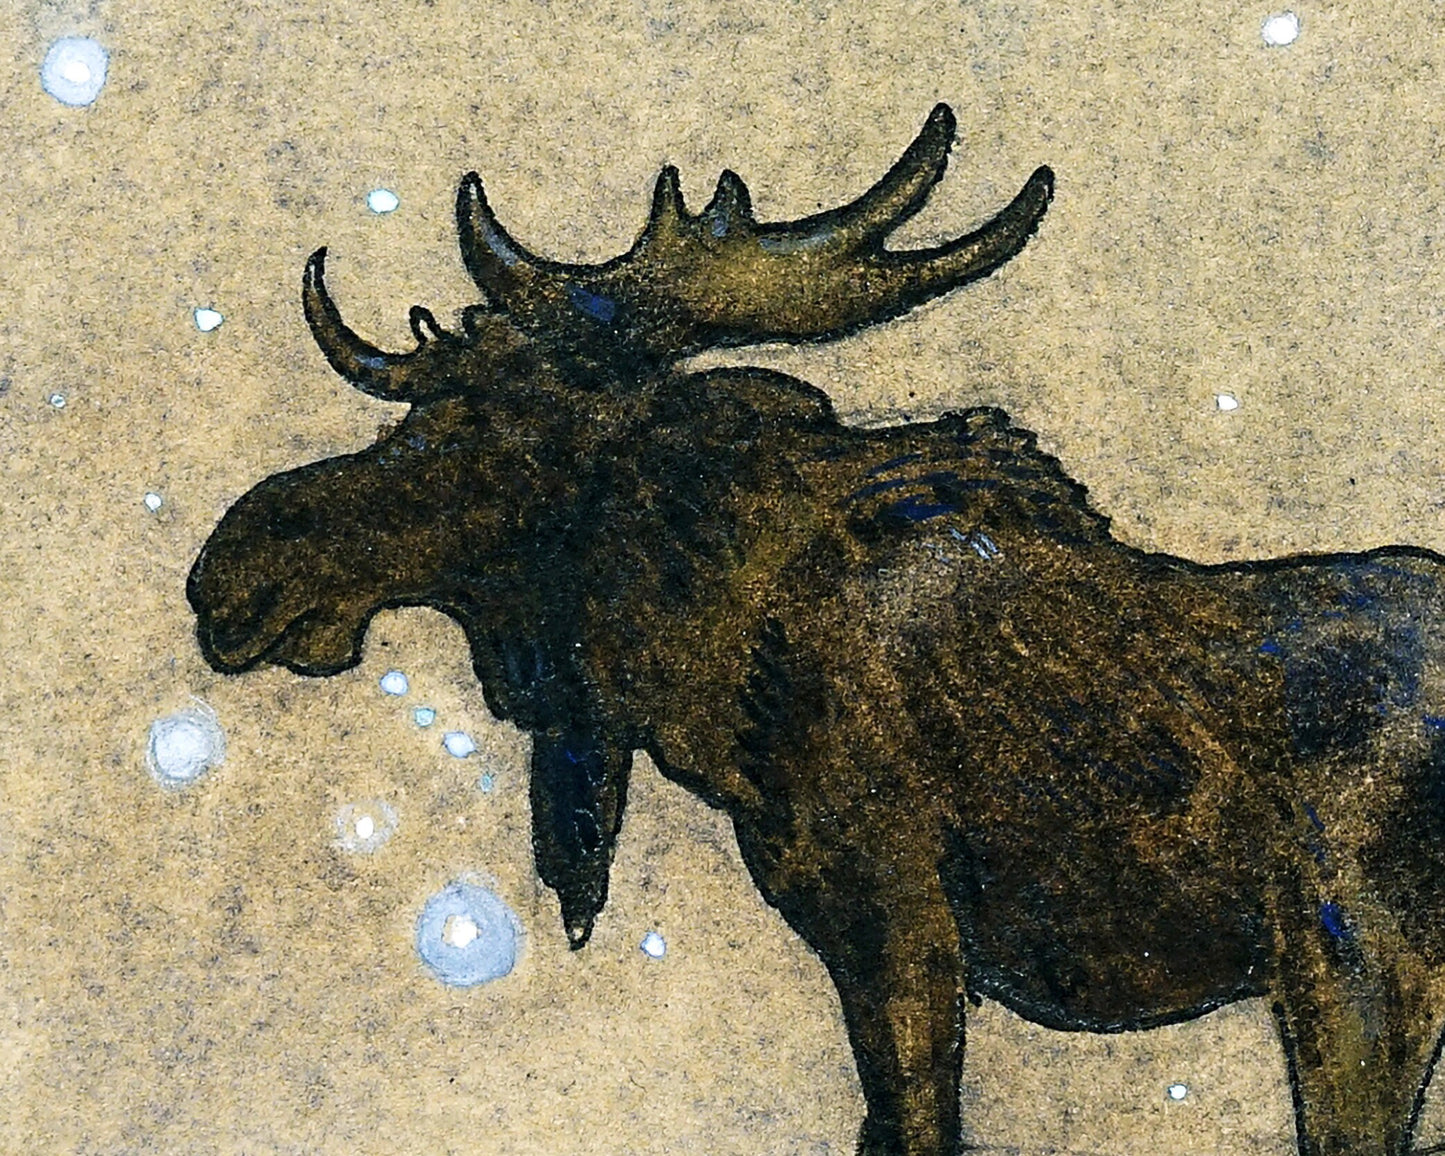 Moose under starry sky | The Elk | Christmas woodland | Fairy tale illustration | Northern lights in art | Fantasy wall art | John Bauer art